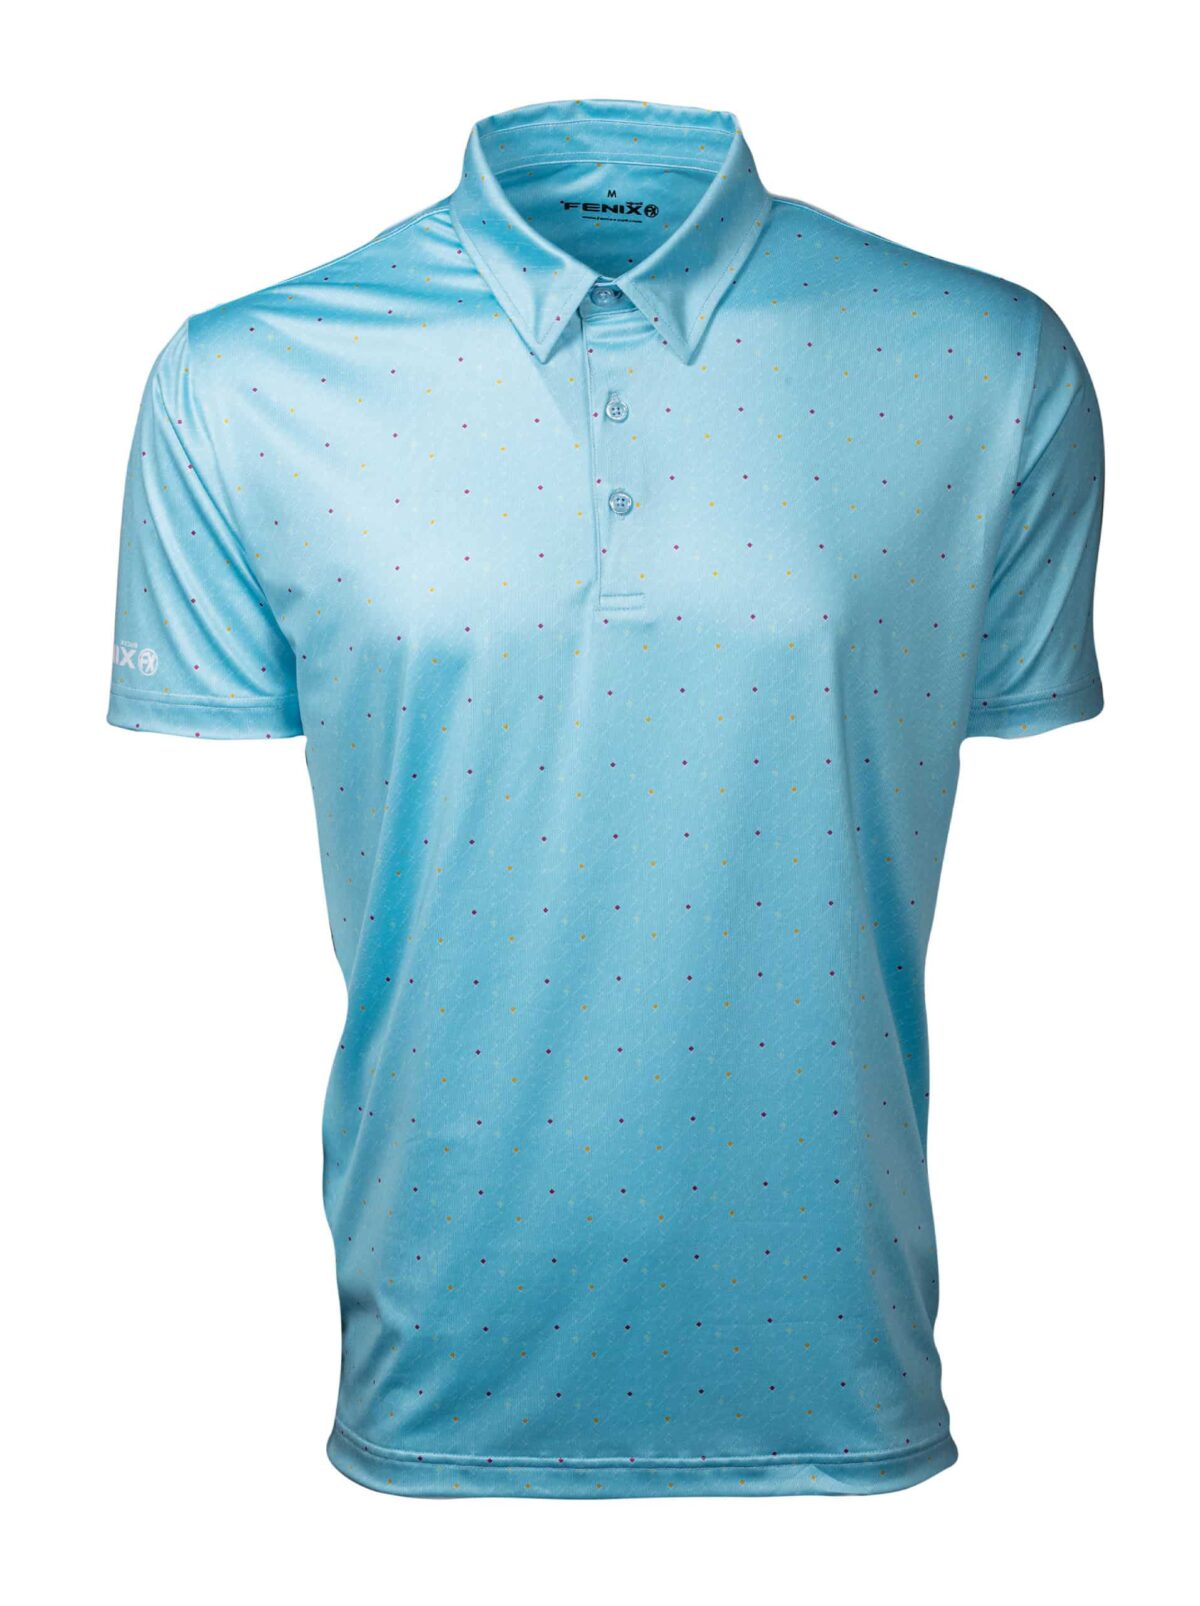 stewart purist blue golf polo shirt